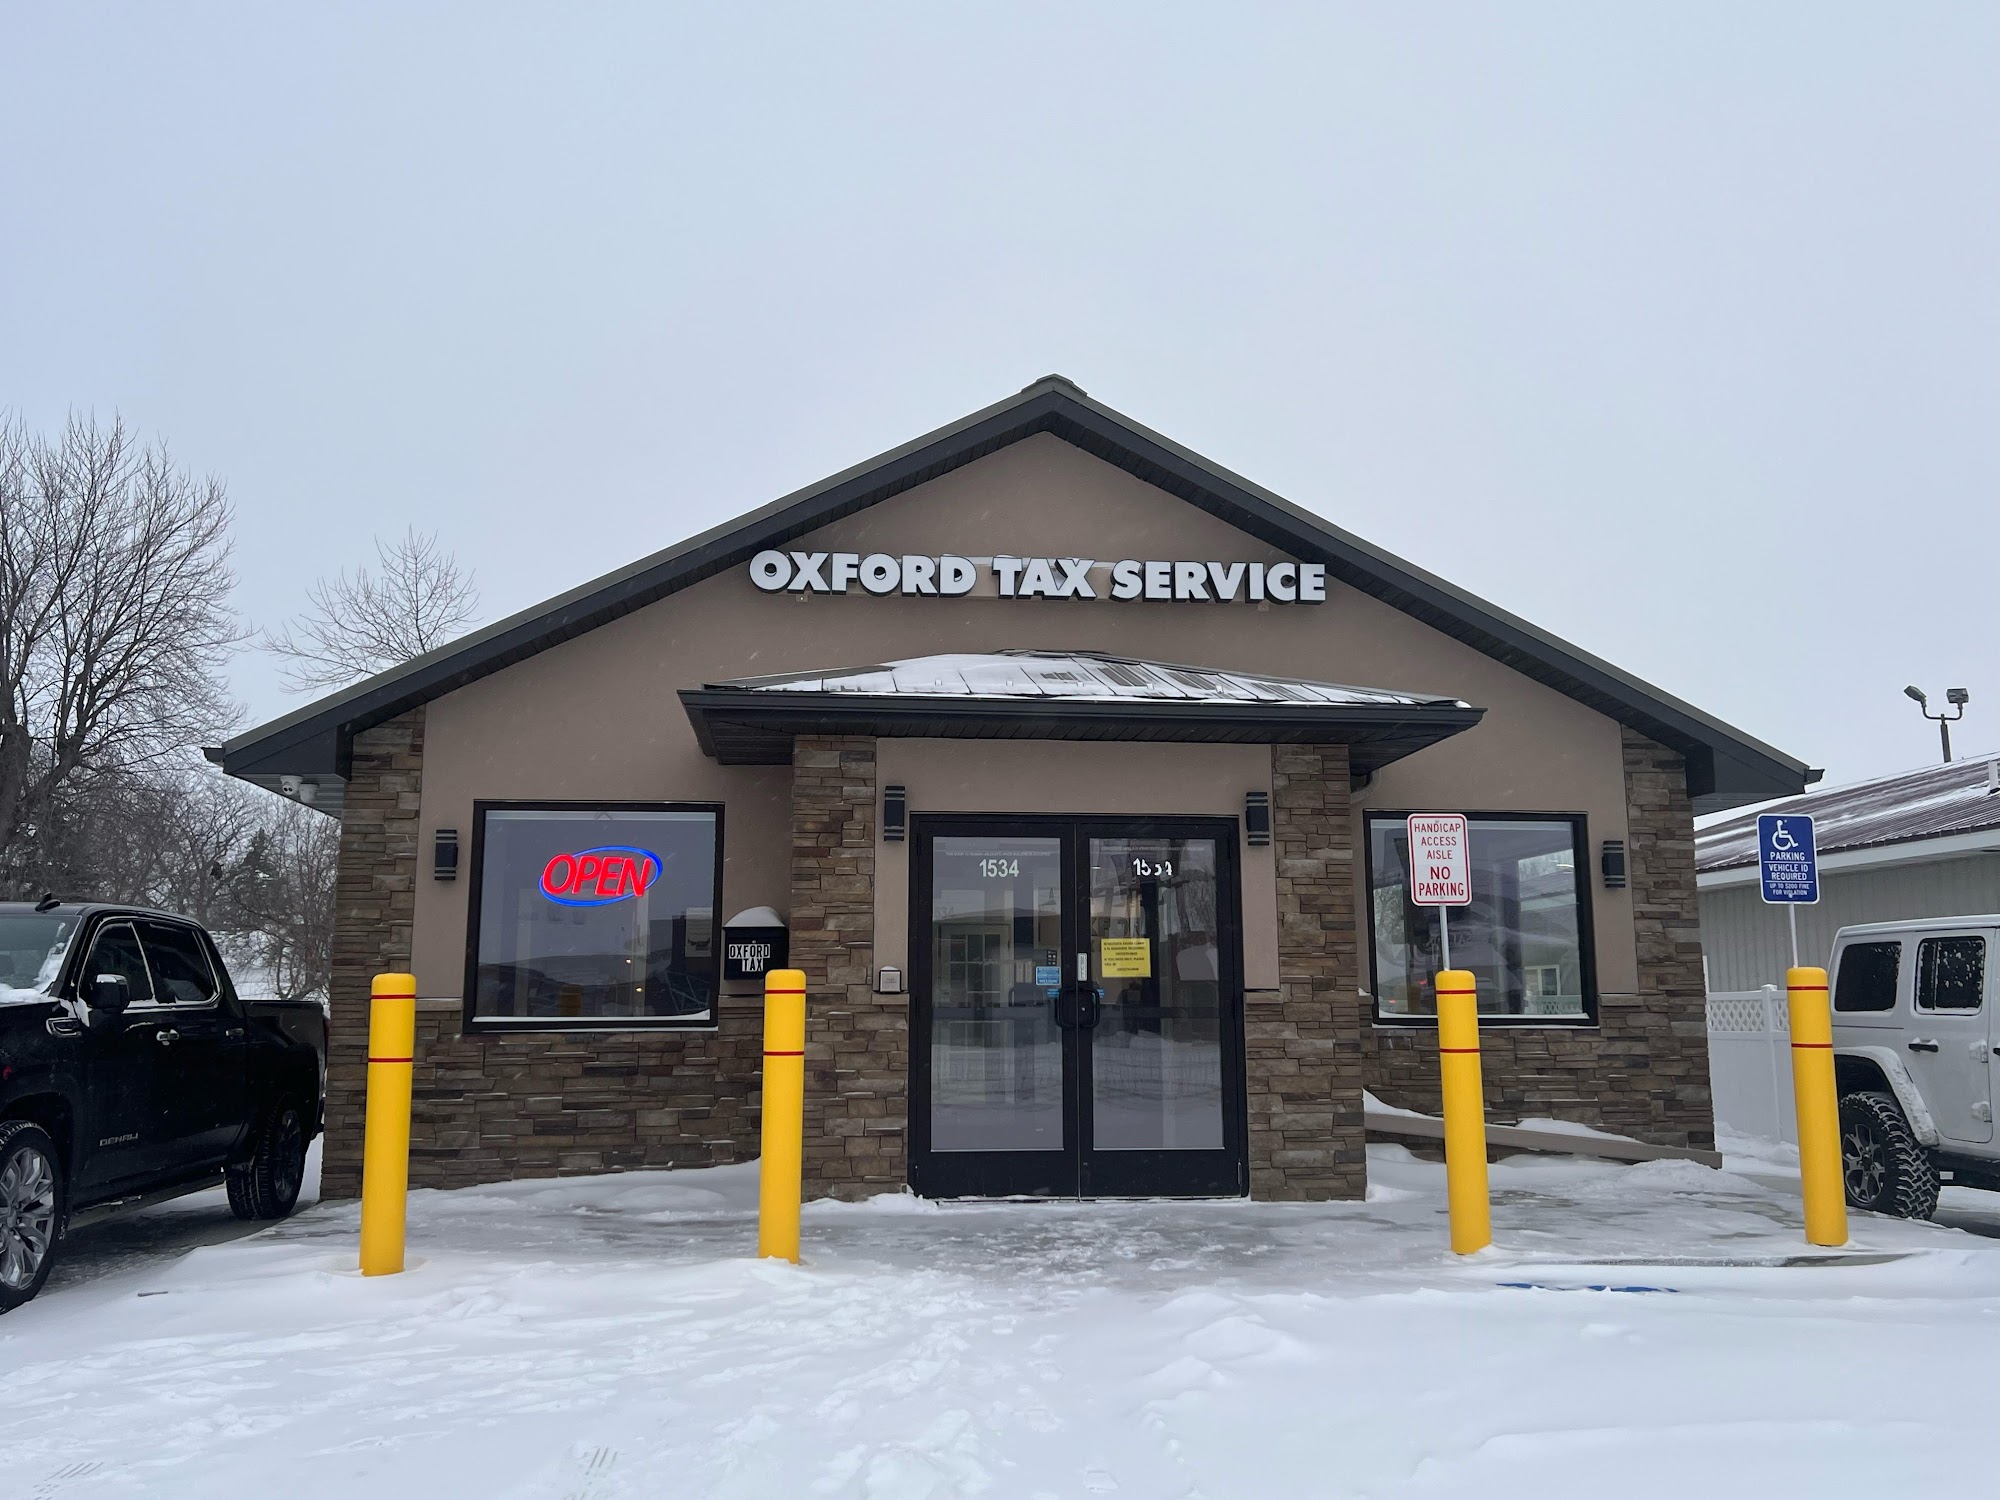 Oxford Tax Service 1323 Grand Ave, Worthington Minnesota 56187